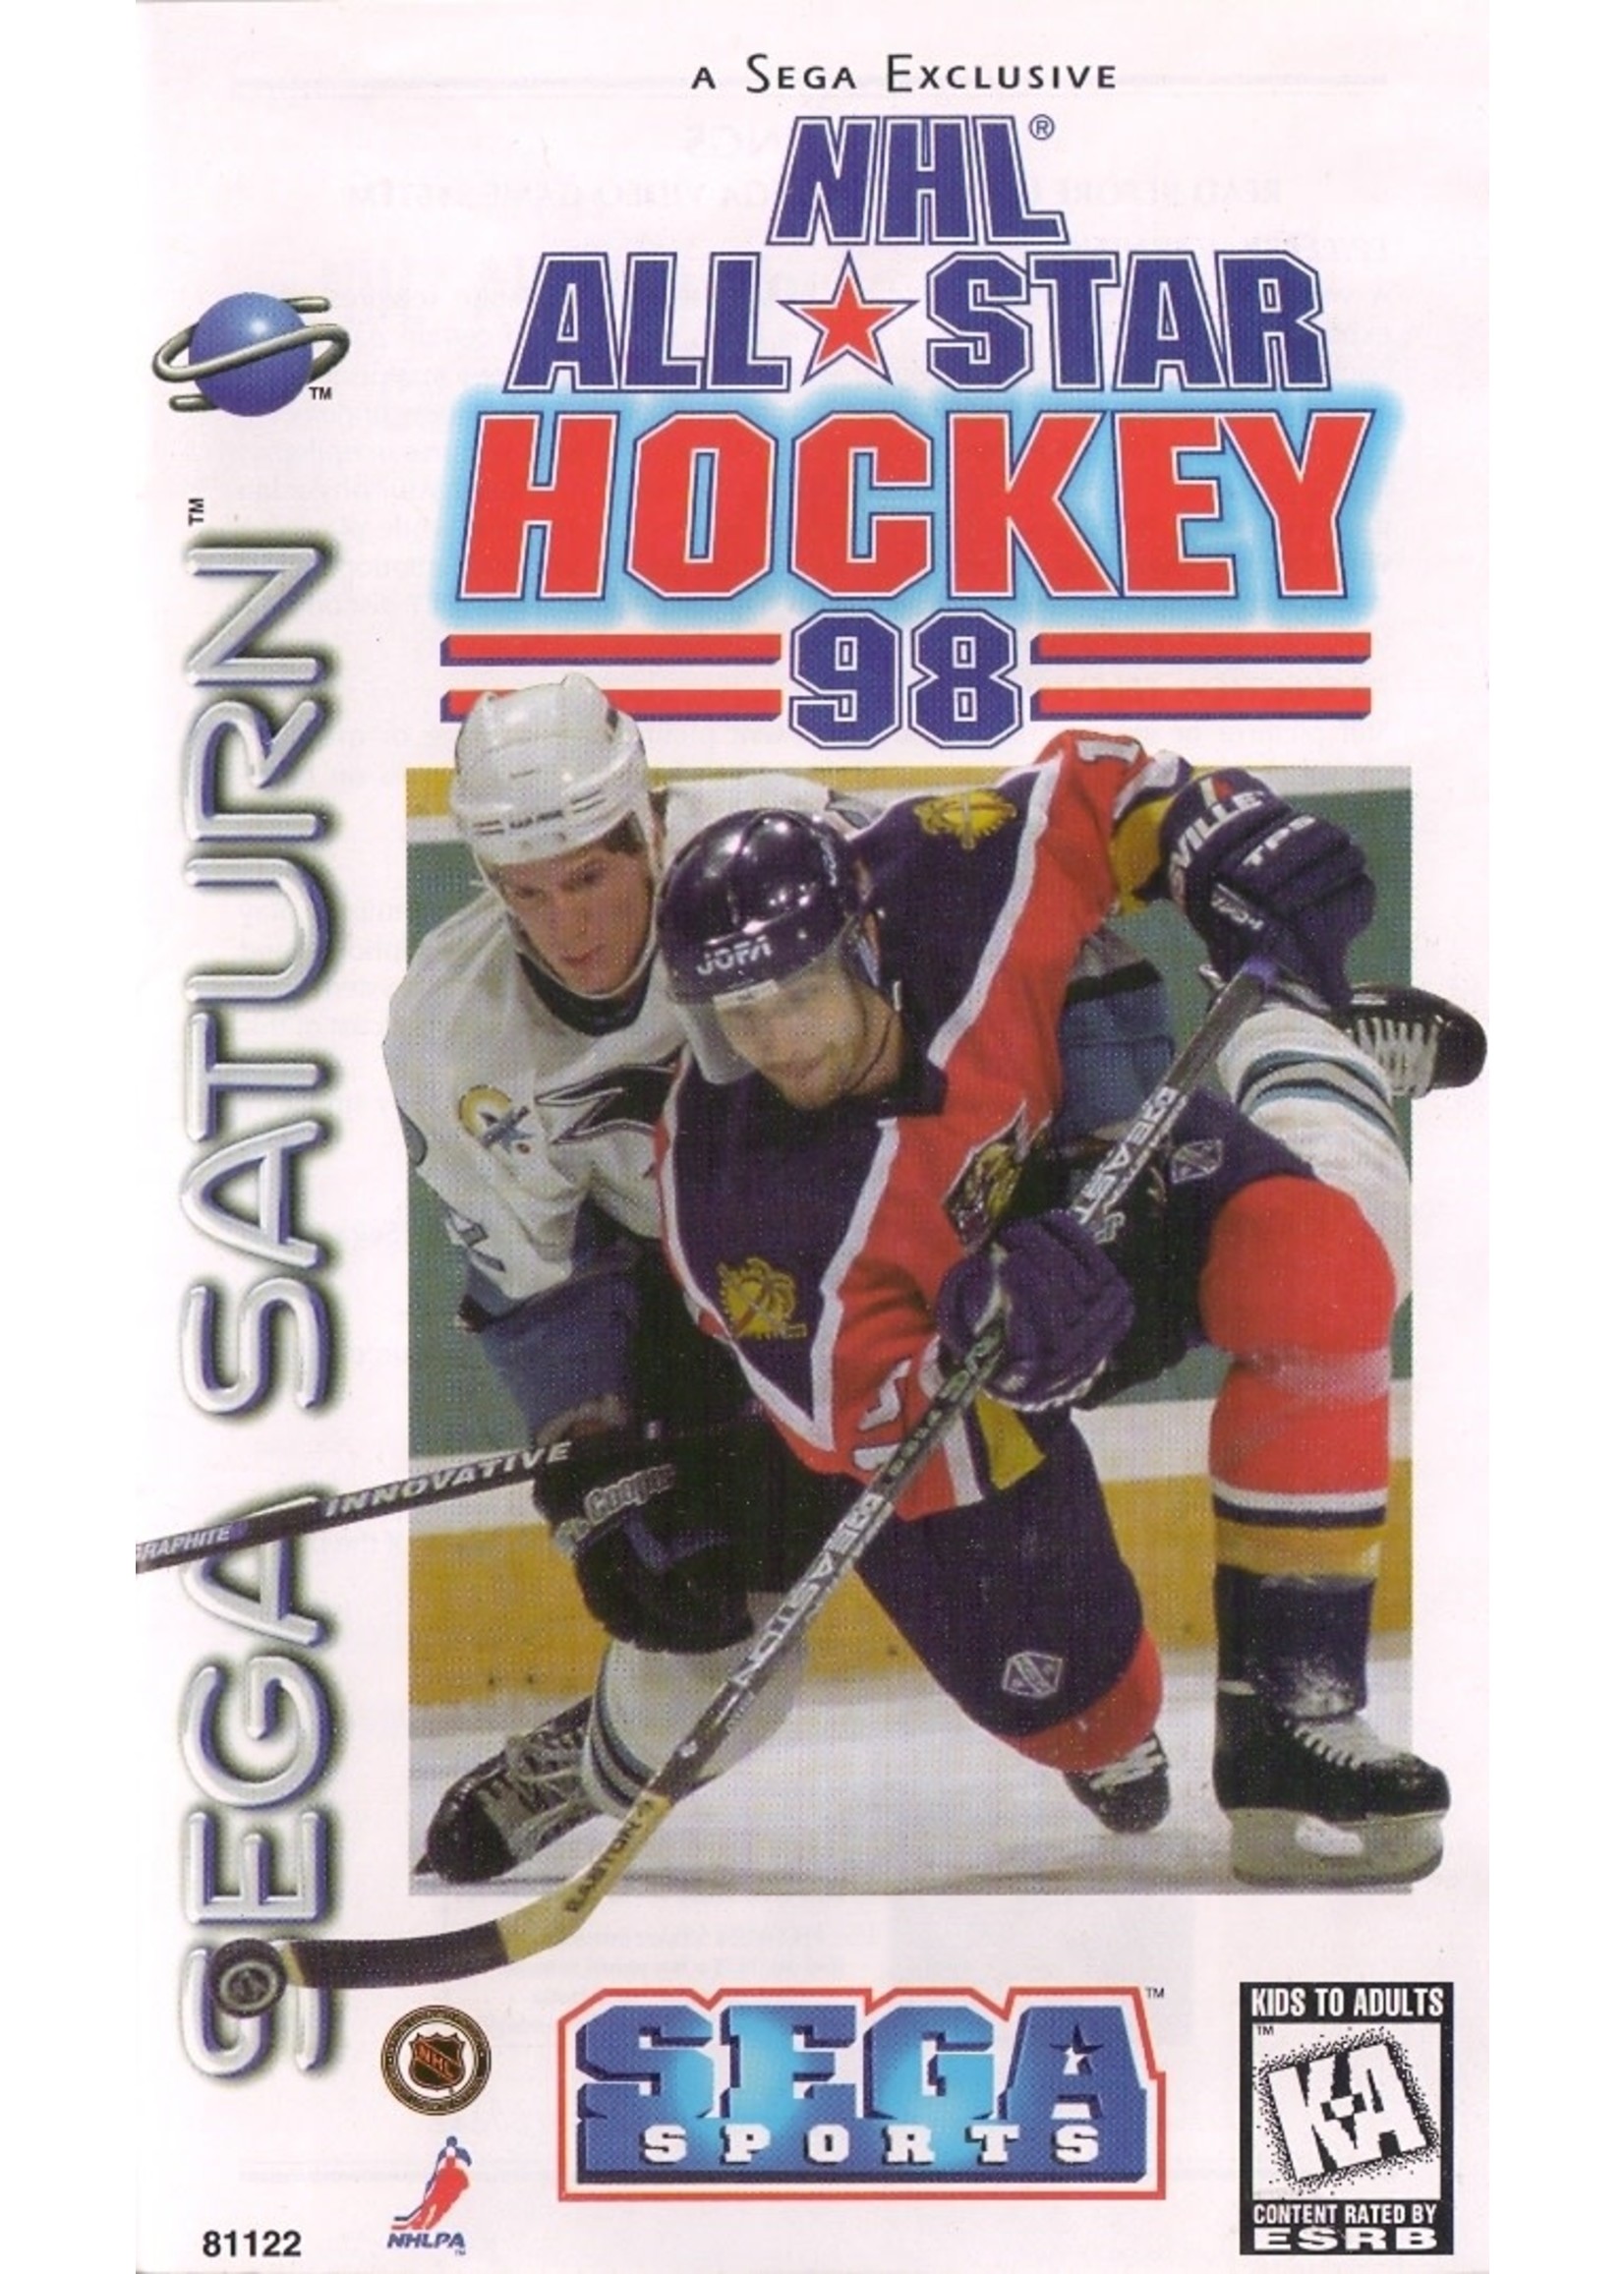 Sega Saturn NHL All-Star Hockey 98